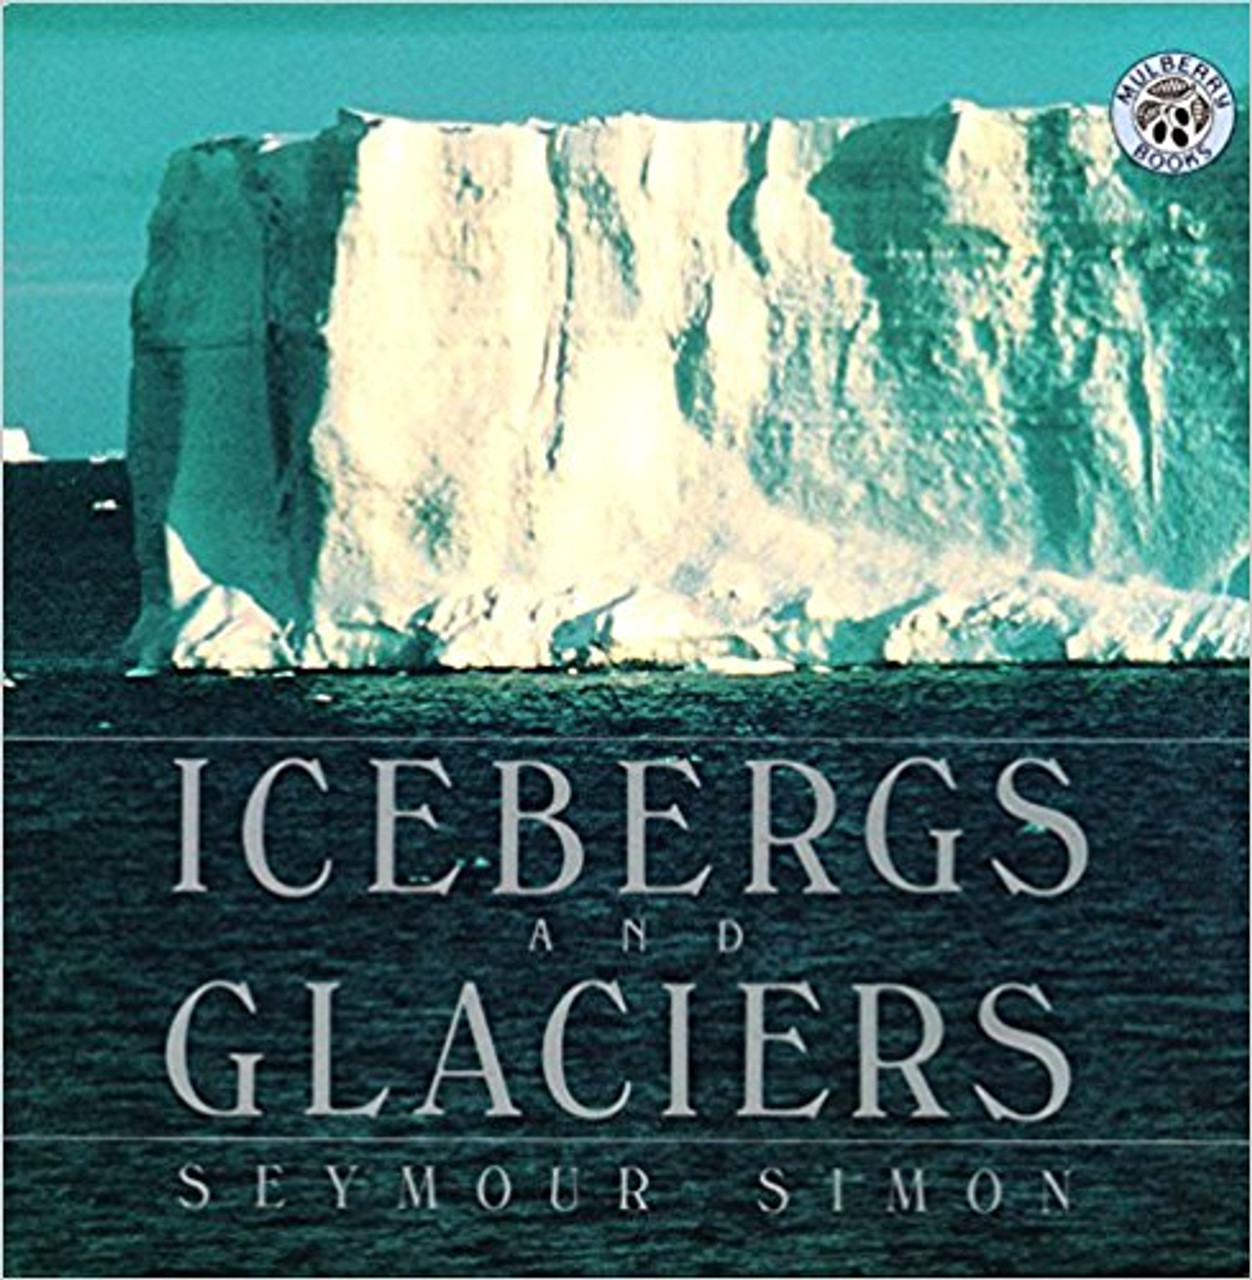 Icebergs and Glaciers by Seymour Simon